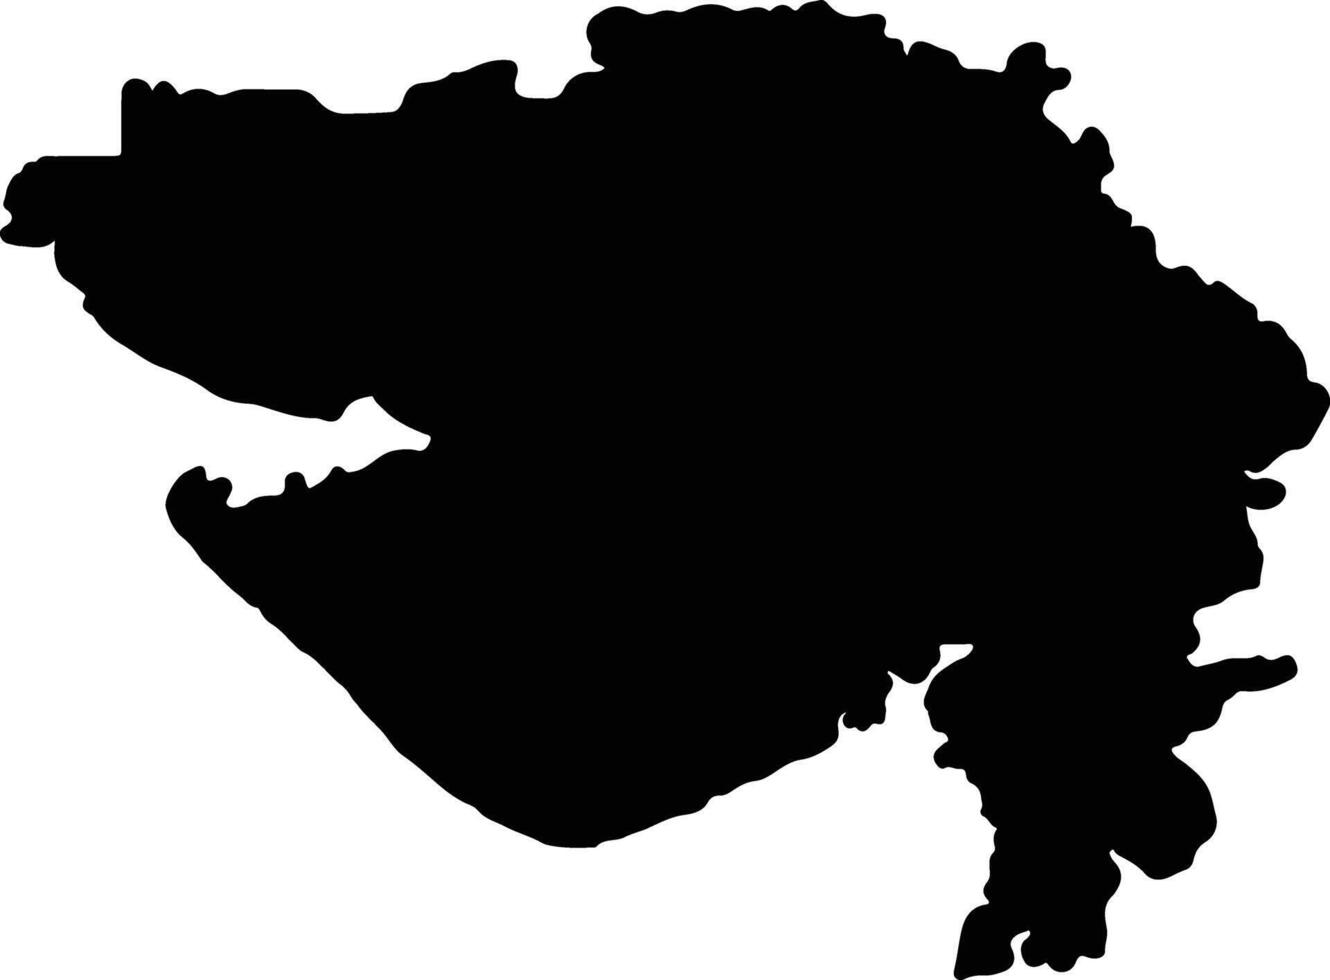 Gujarat India silhouette map vector